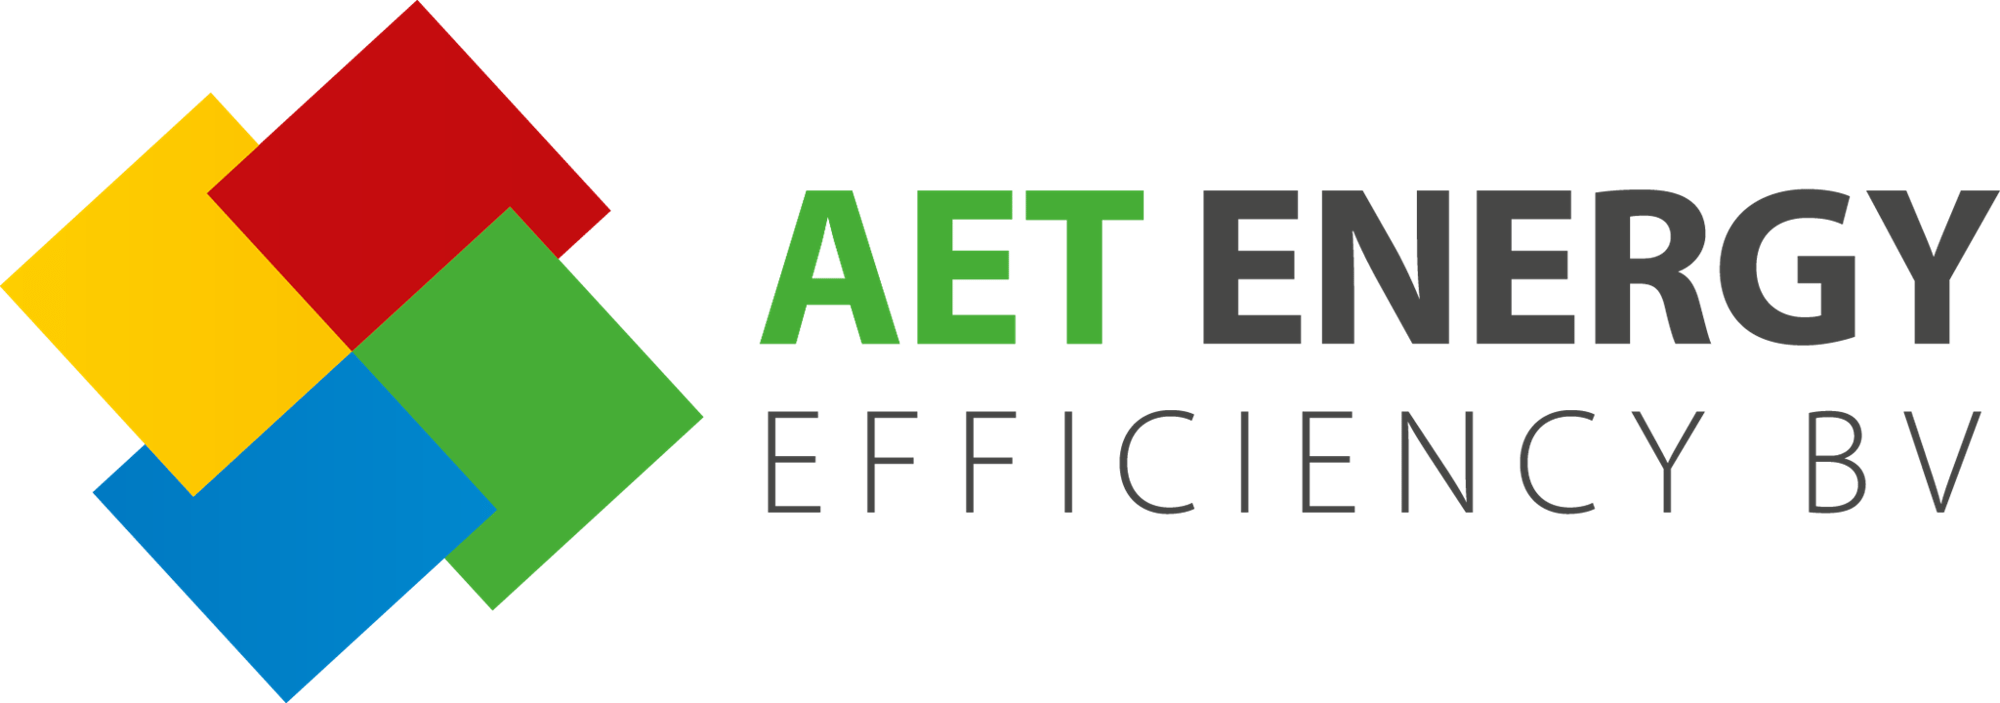 Incontrol-klant-AET-Energy-logo-NL